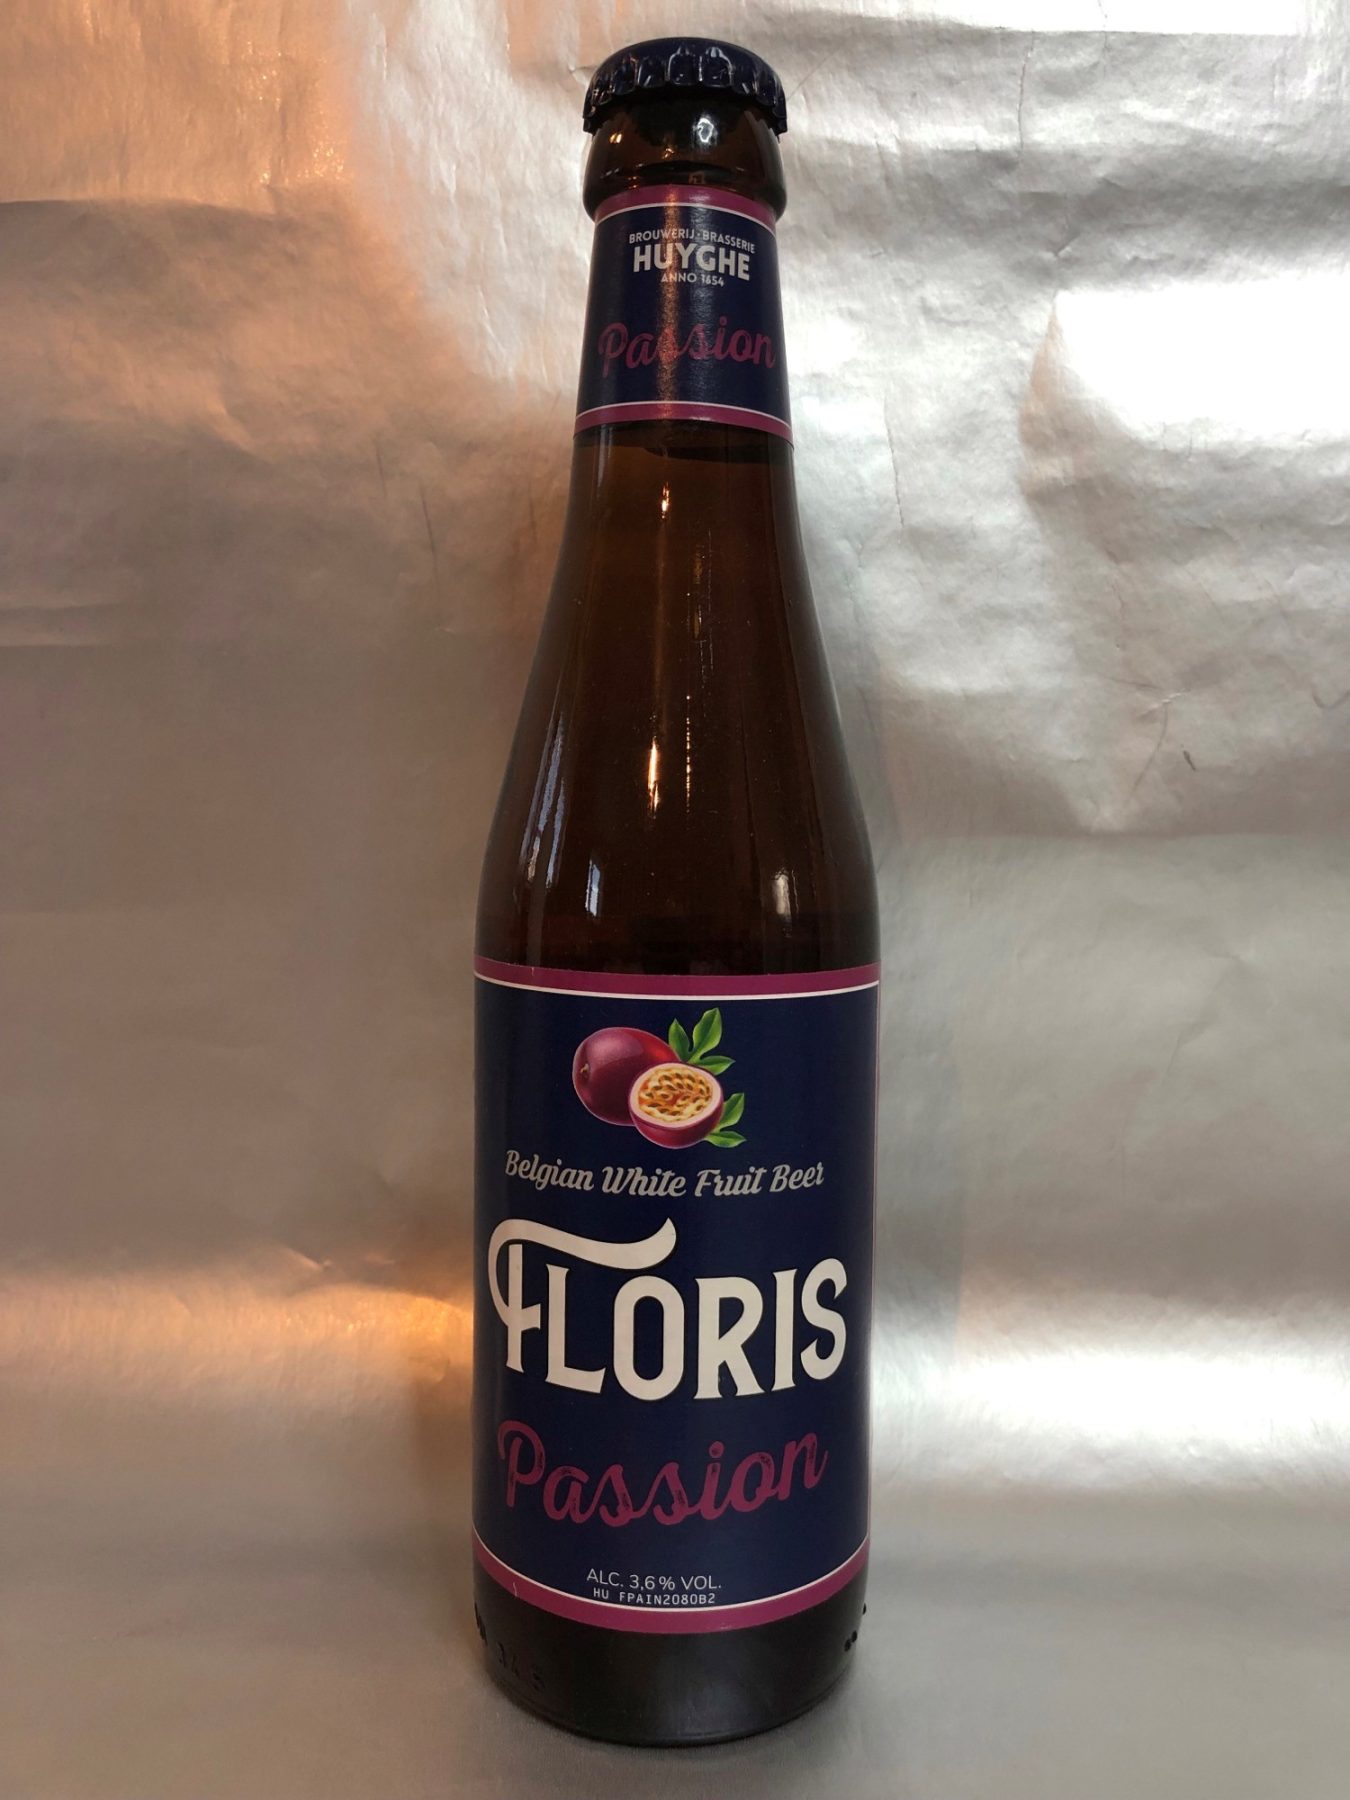 Floris 'passion' beer